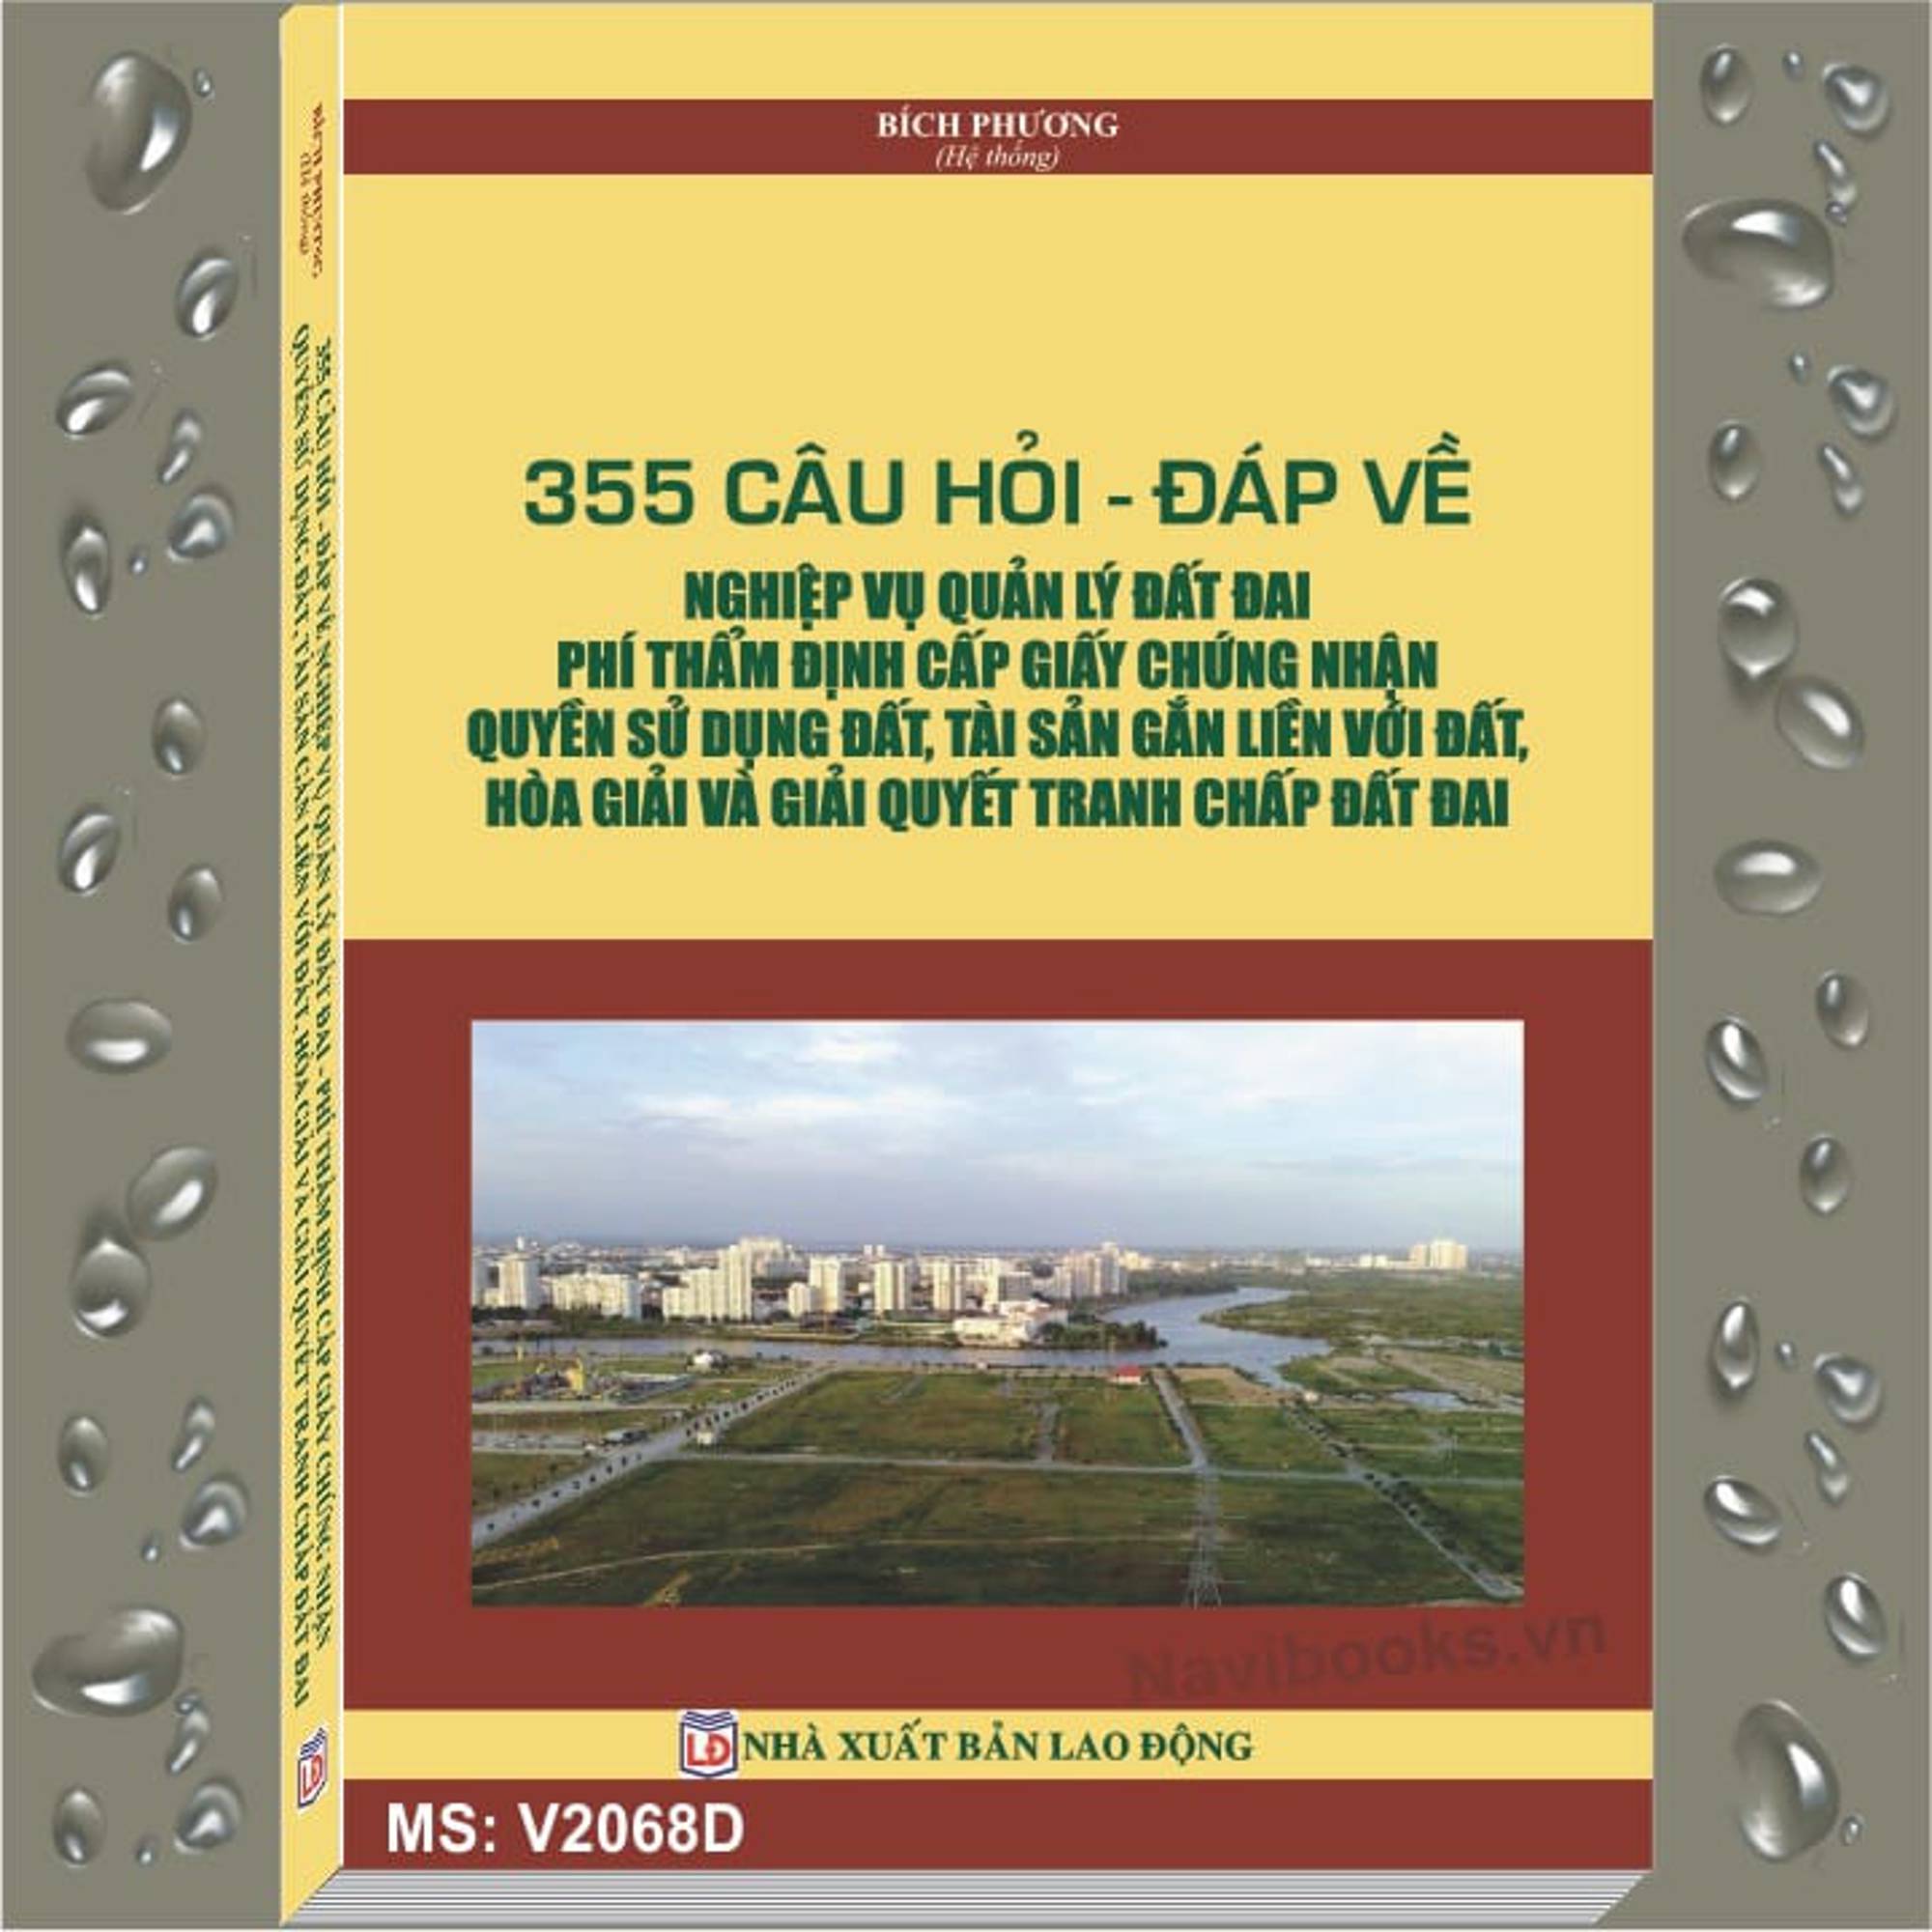 sach-355-cau-hoi-dap-ve-nghiep-vu-quan-ly-dat-dai-2